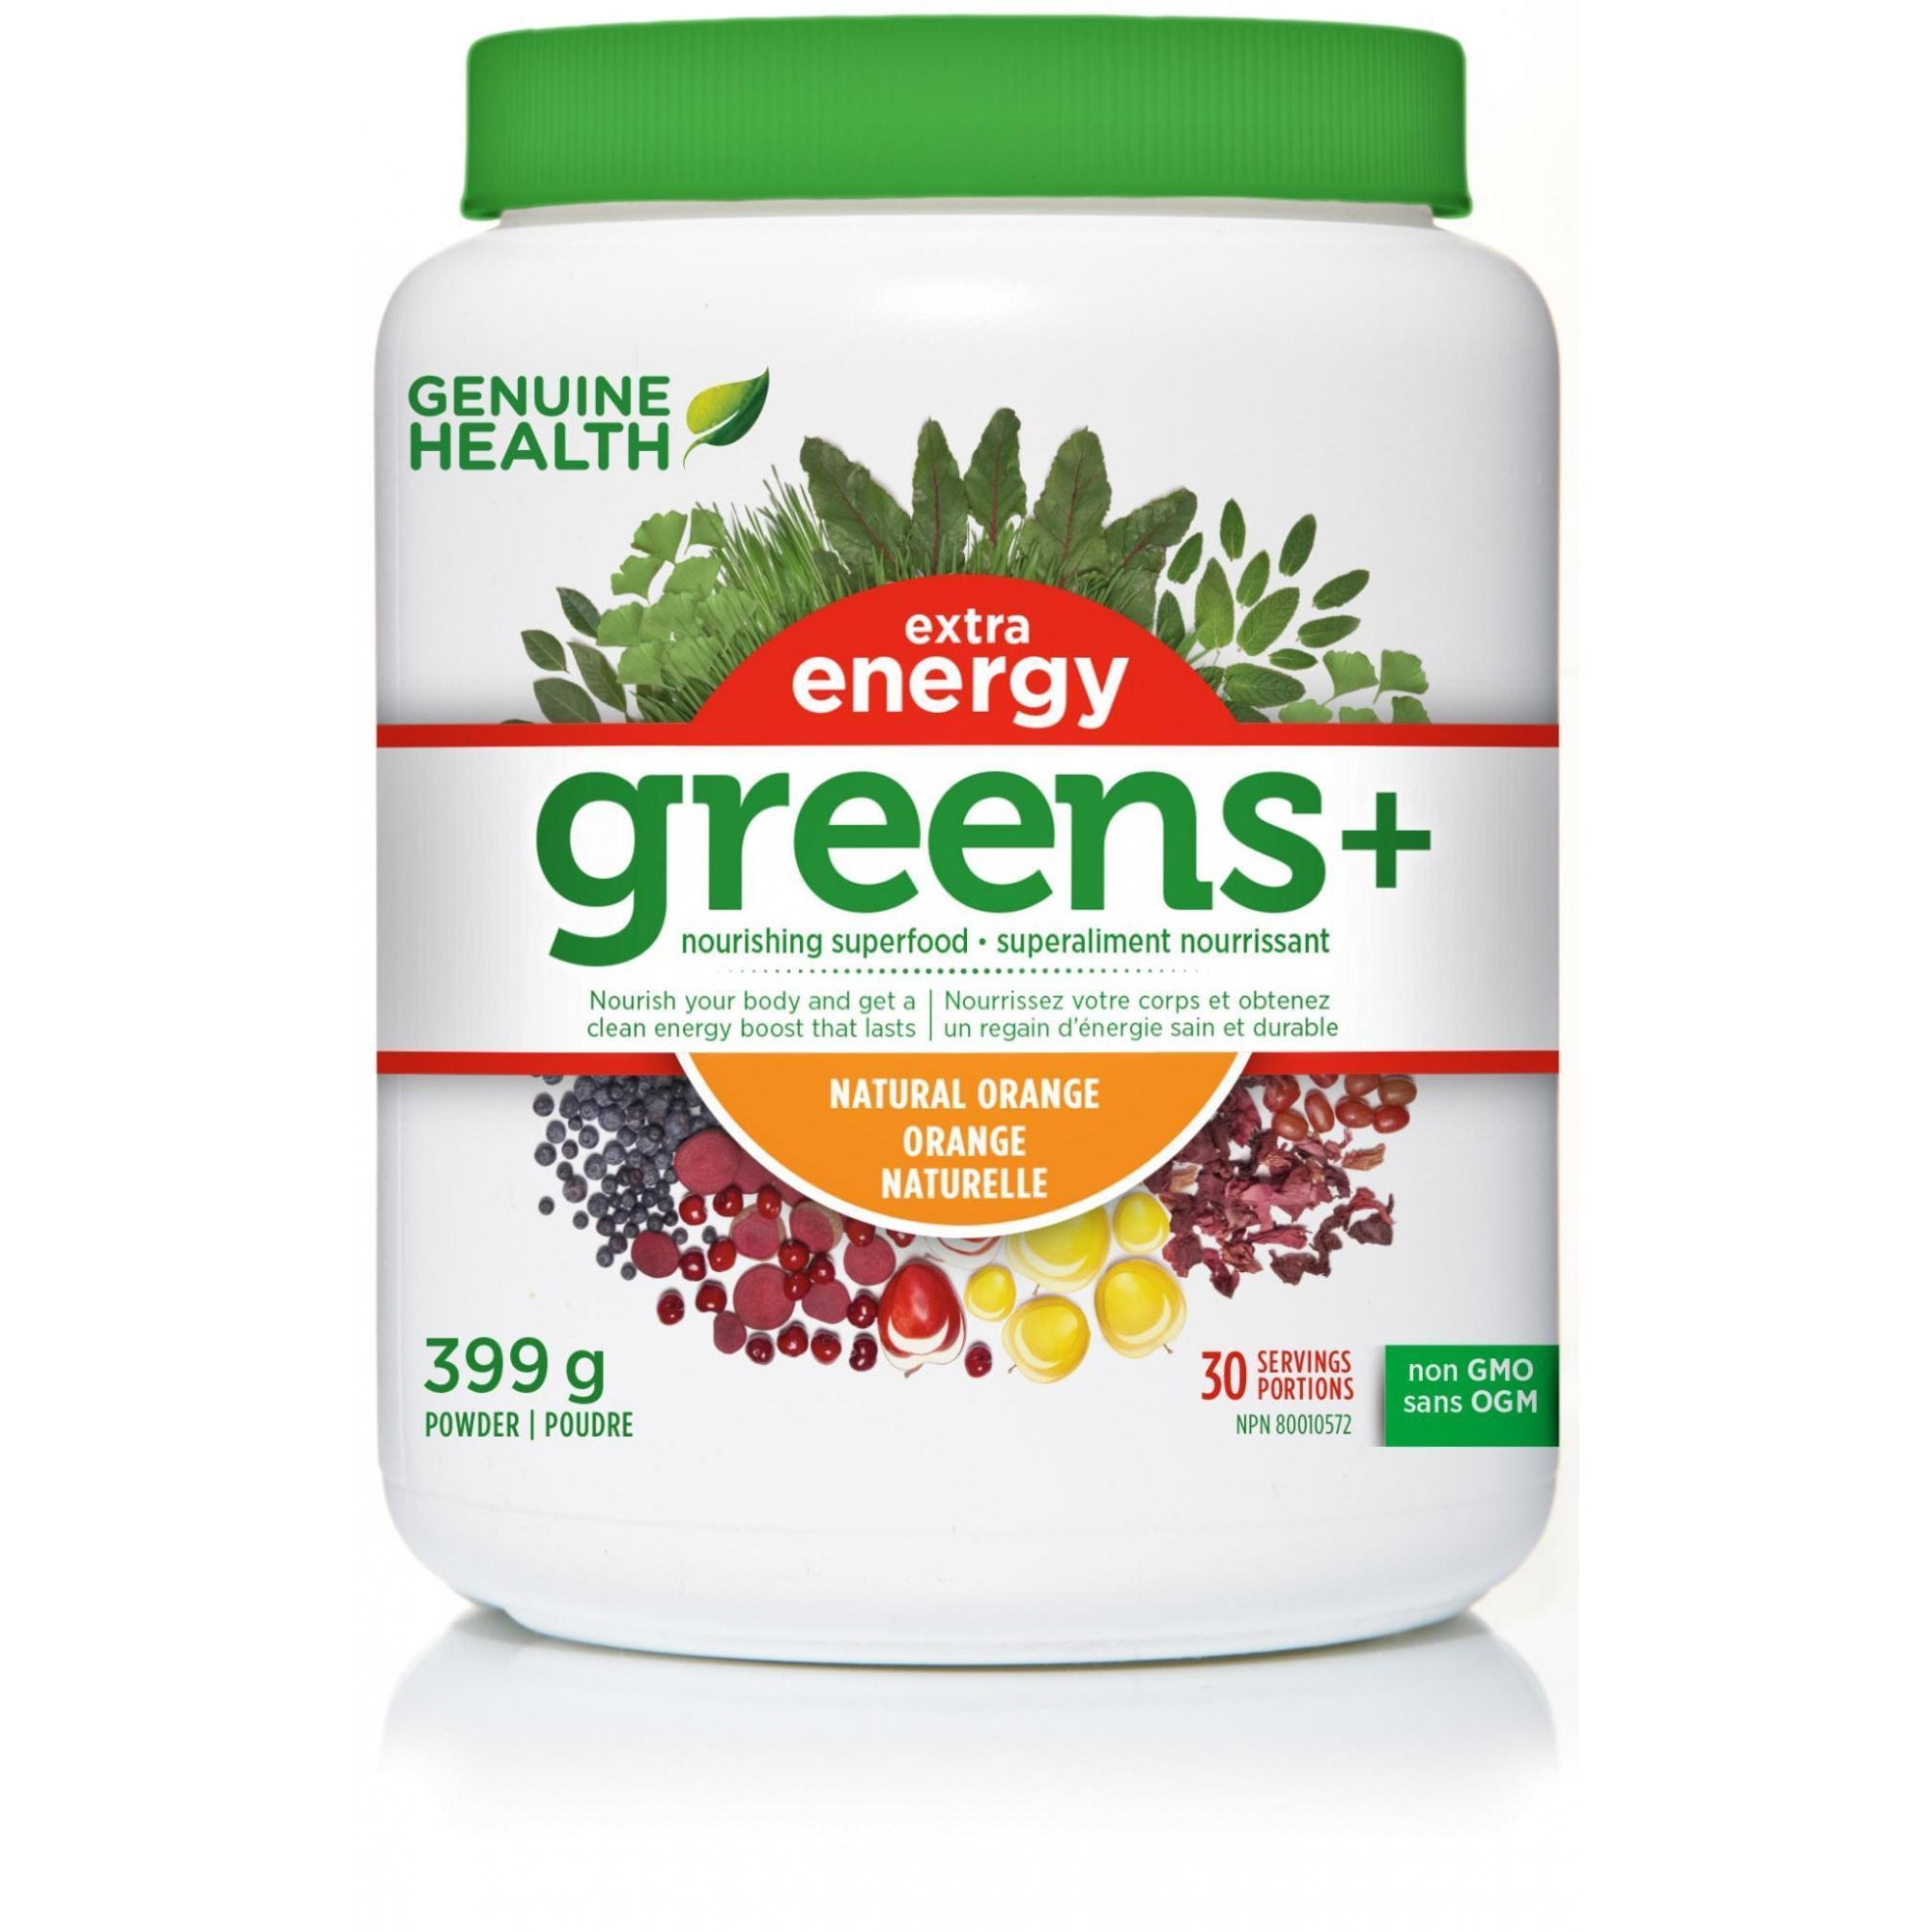 Genuine Health Greens+ Extra Energy 399g genuine-health-greens-extra-energy-399g Greens Natural Orange Genuine Health